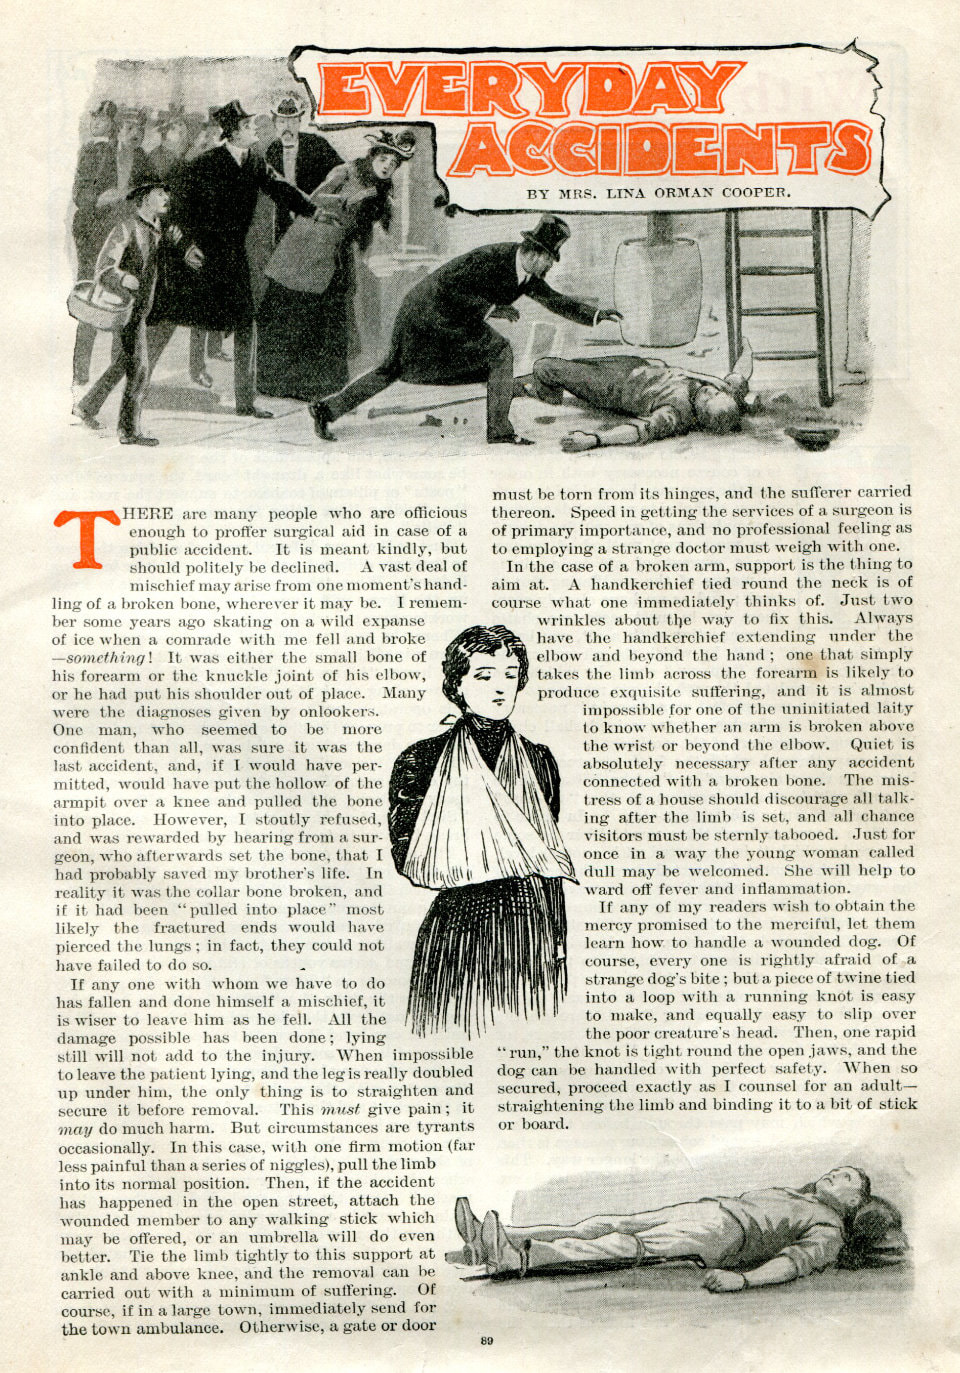 Stalbridge magazine of 1902